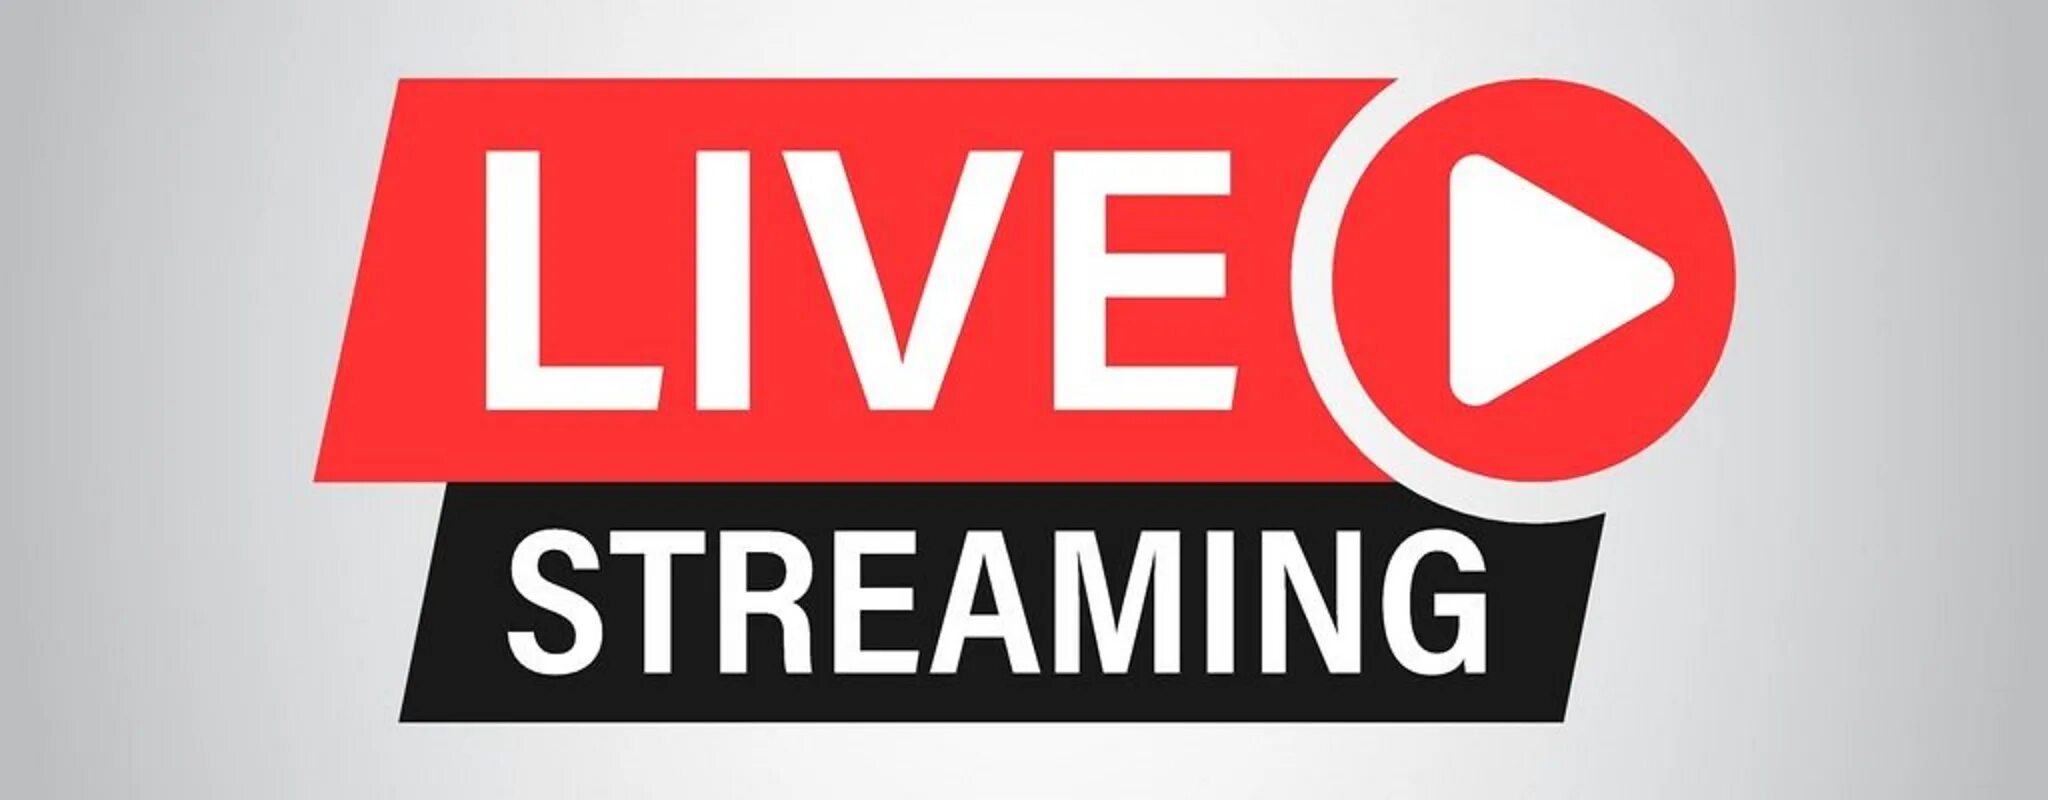 Live Stream. Live трансляции. Лайв стрим. Live логотип. Стрим на английском